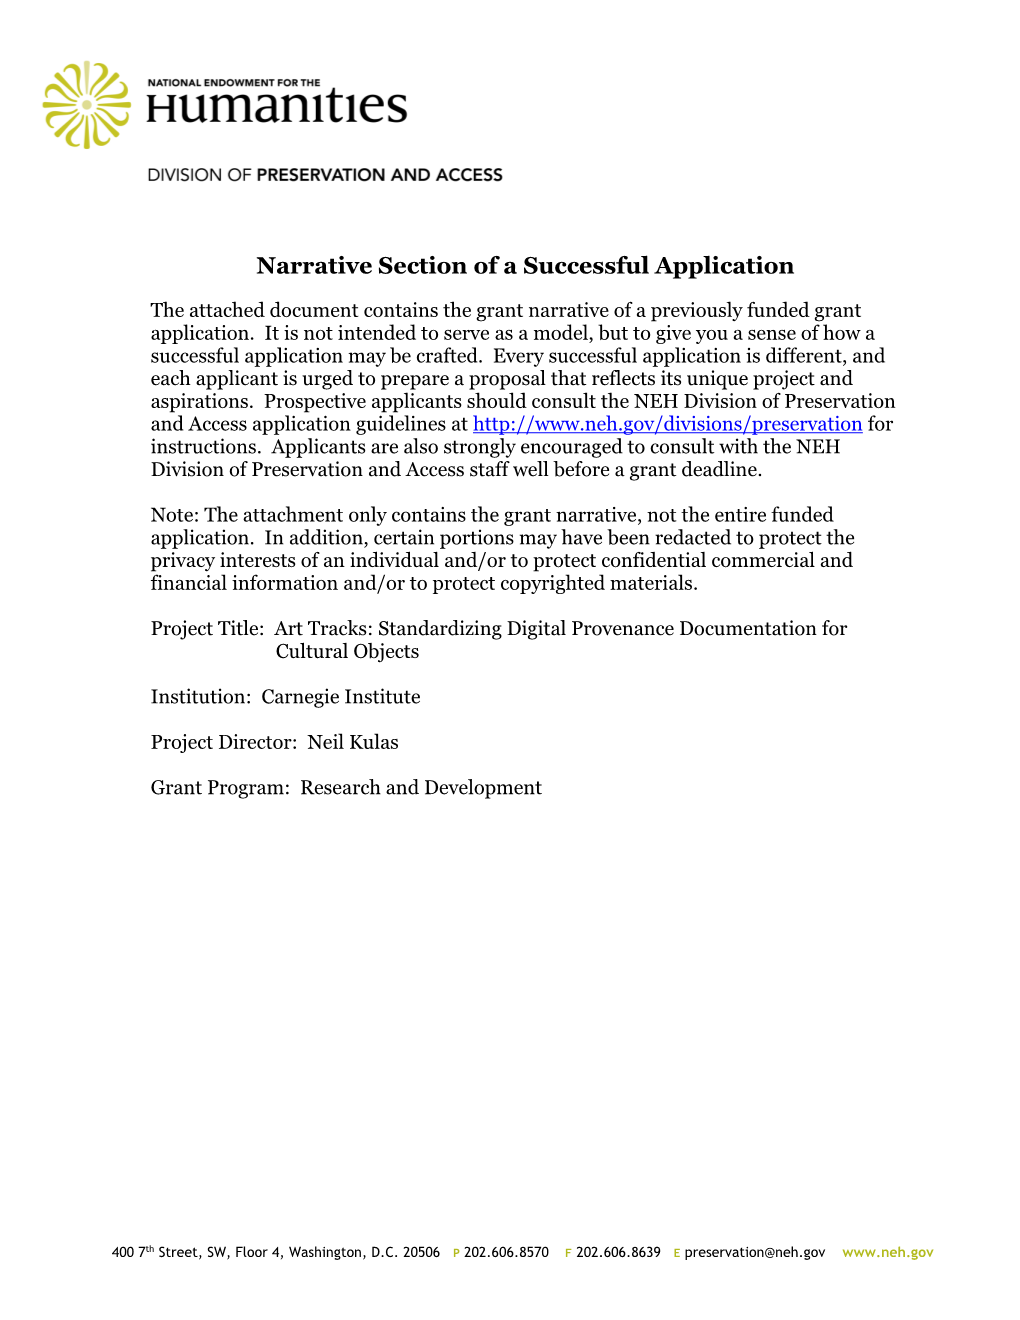 Carnegie Institute, Standardizing Digital Provenance Documentation